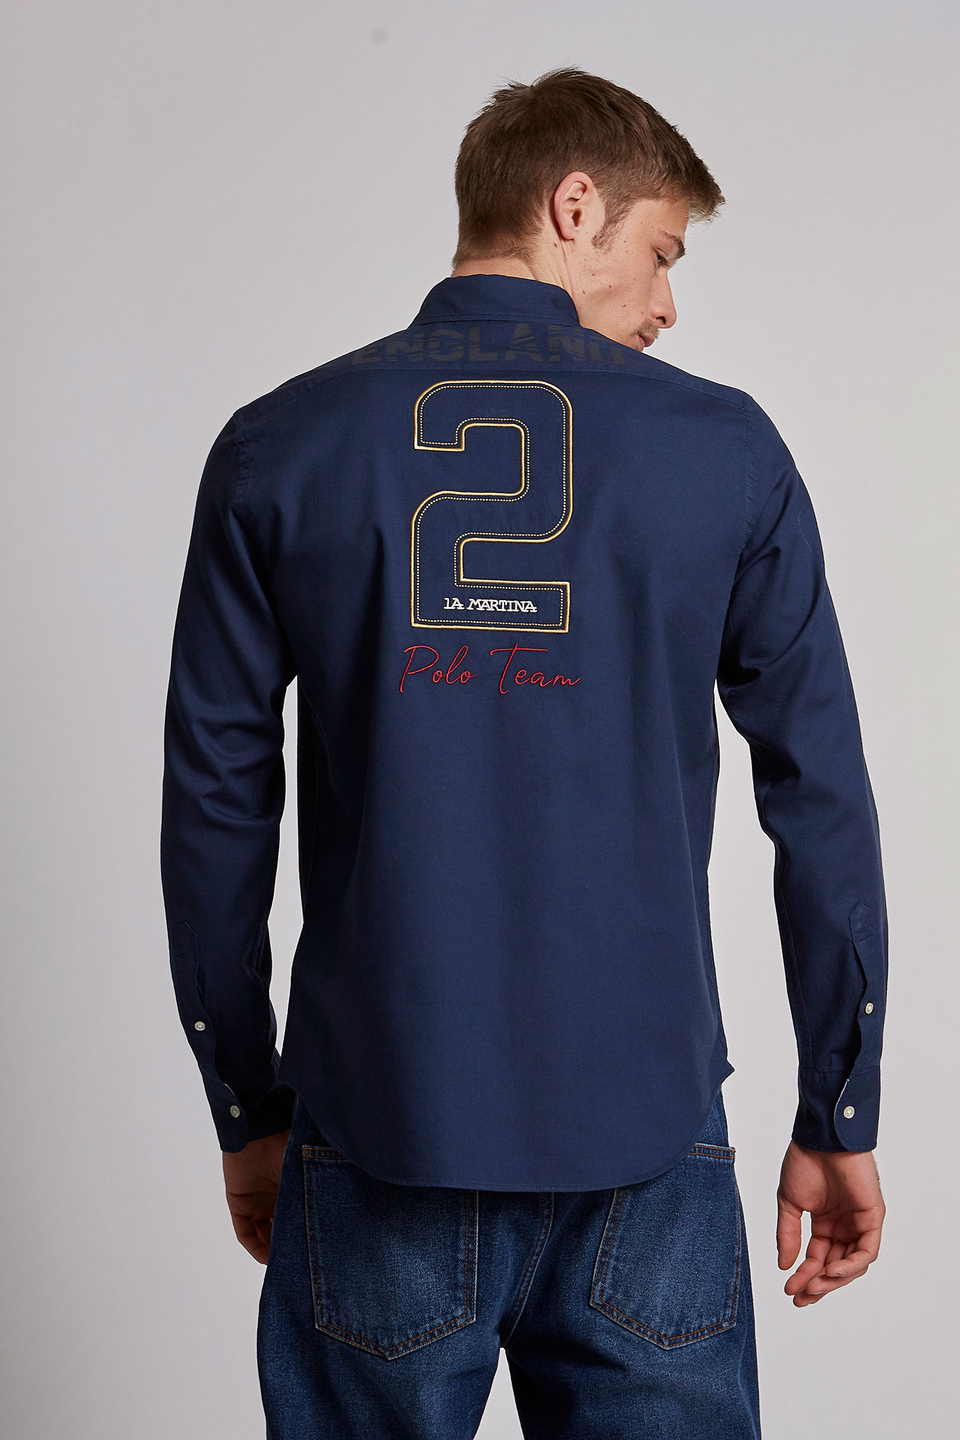 Men's long-sleeved regular-fit cotton shirt | La Martina - Official Online Shop